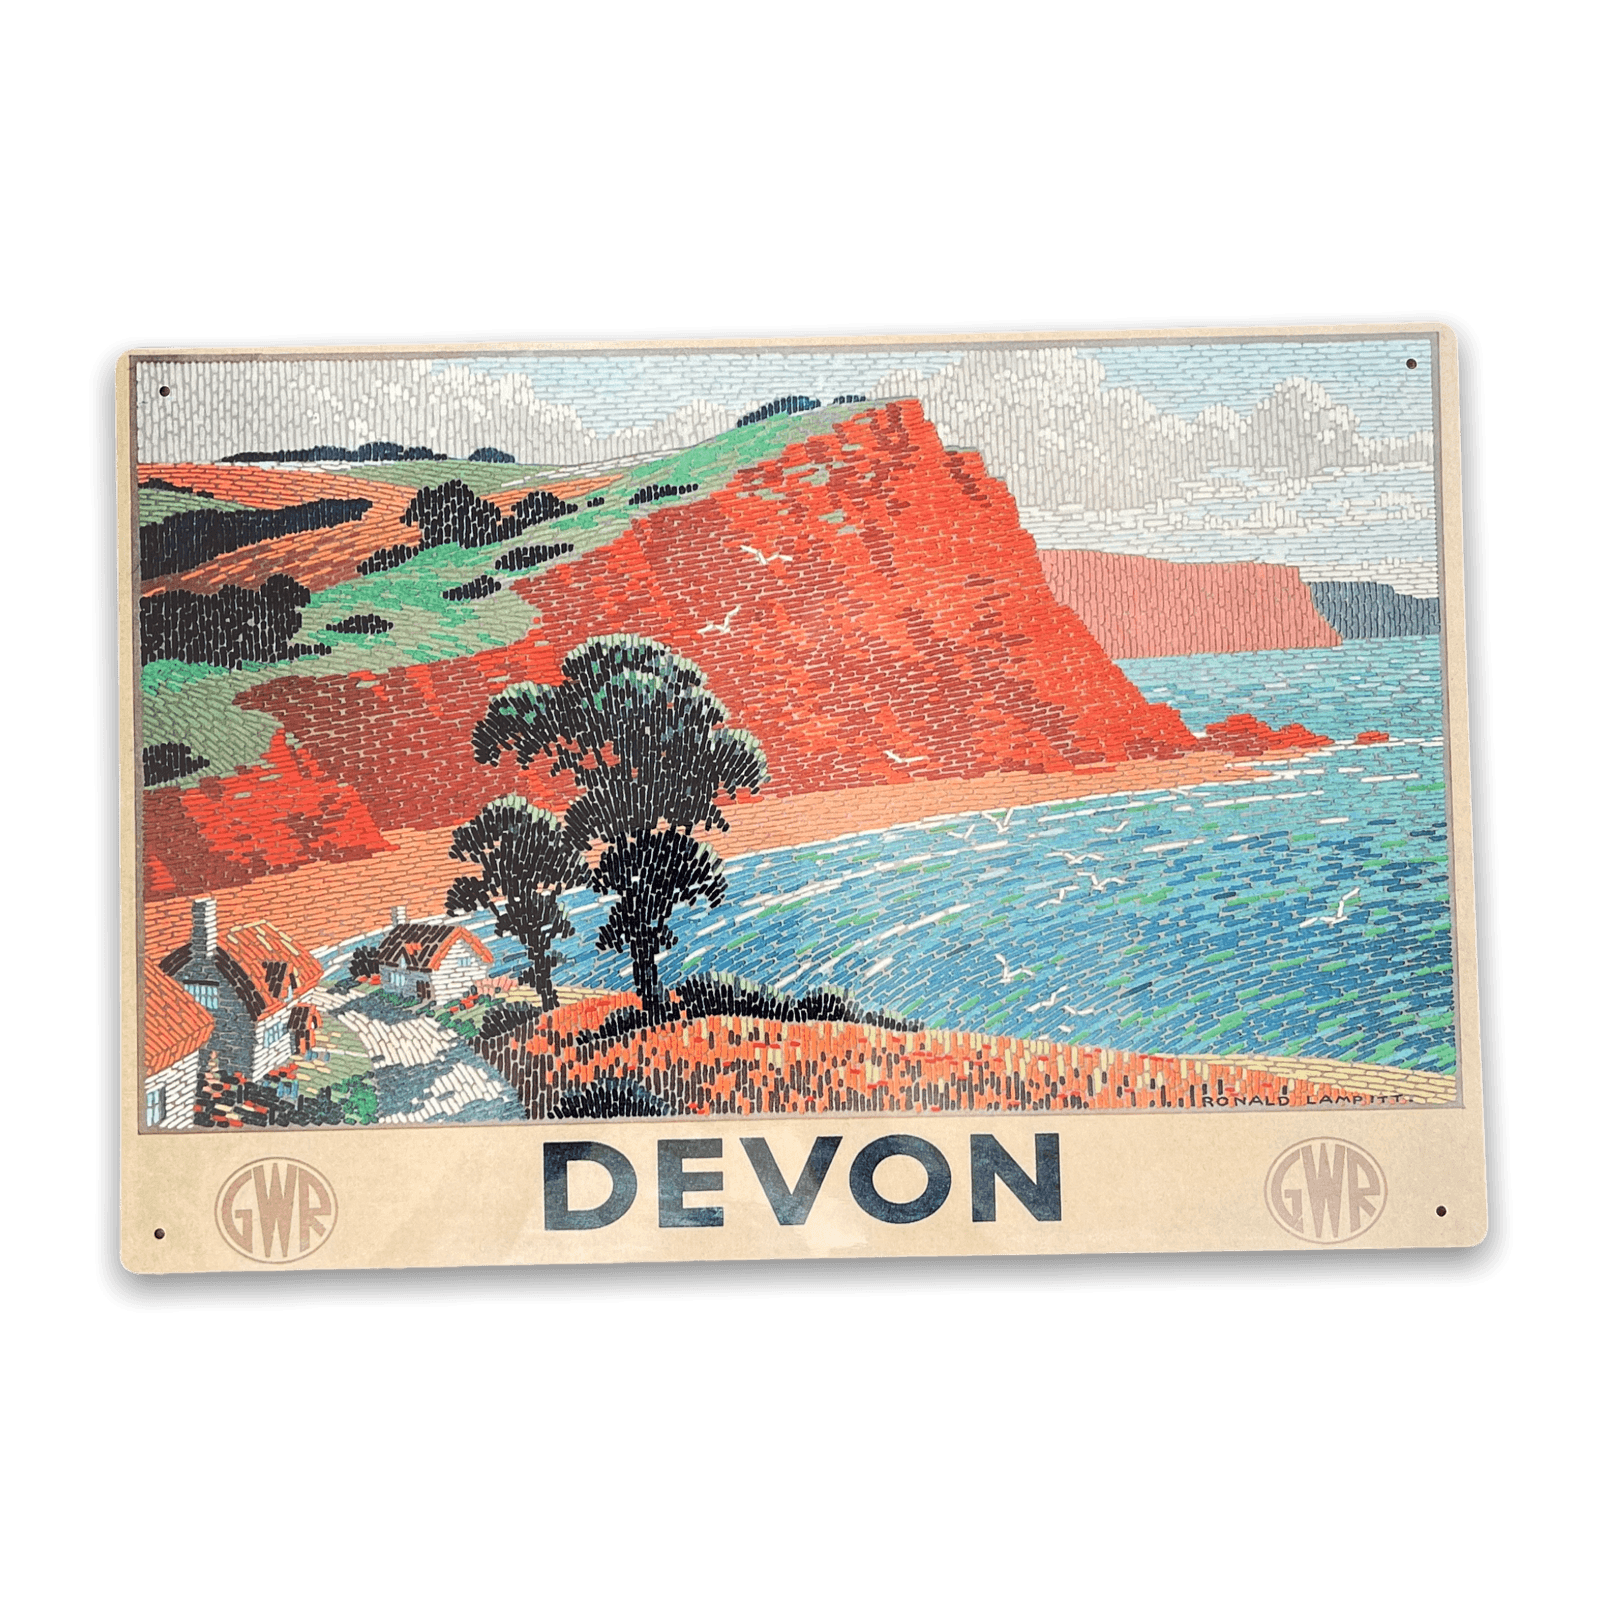 Vintage Metal Sign - Great Western Railway, Devon-Retro Advertising